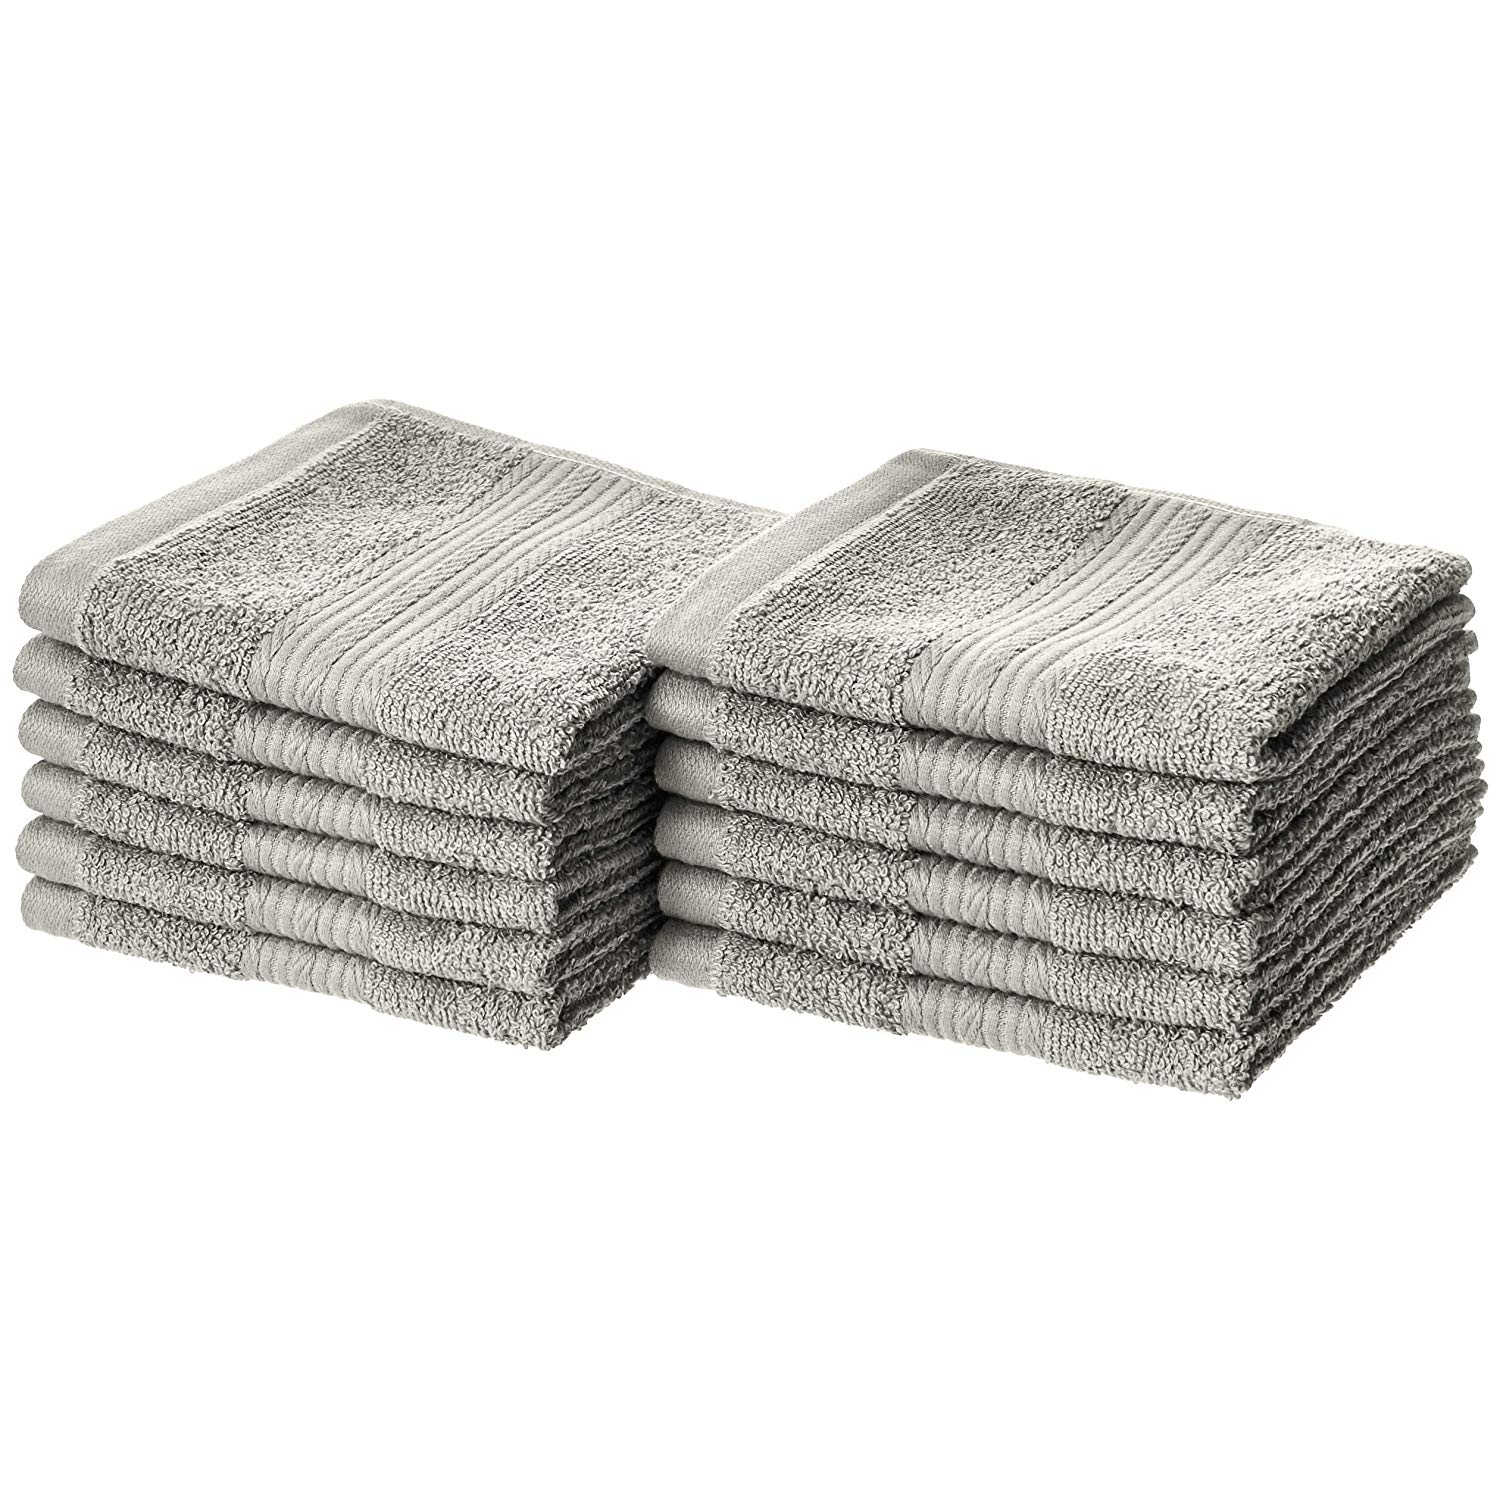 AmazonBasics Fade-Resistant Cotton Washcloths, 12 Pack